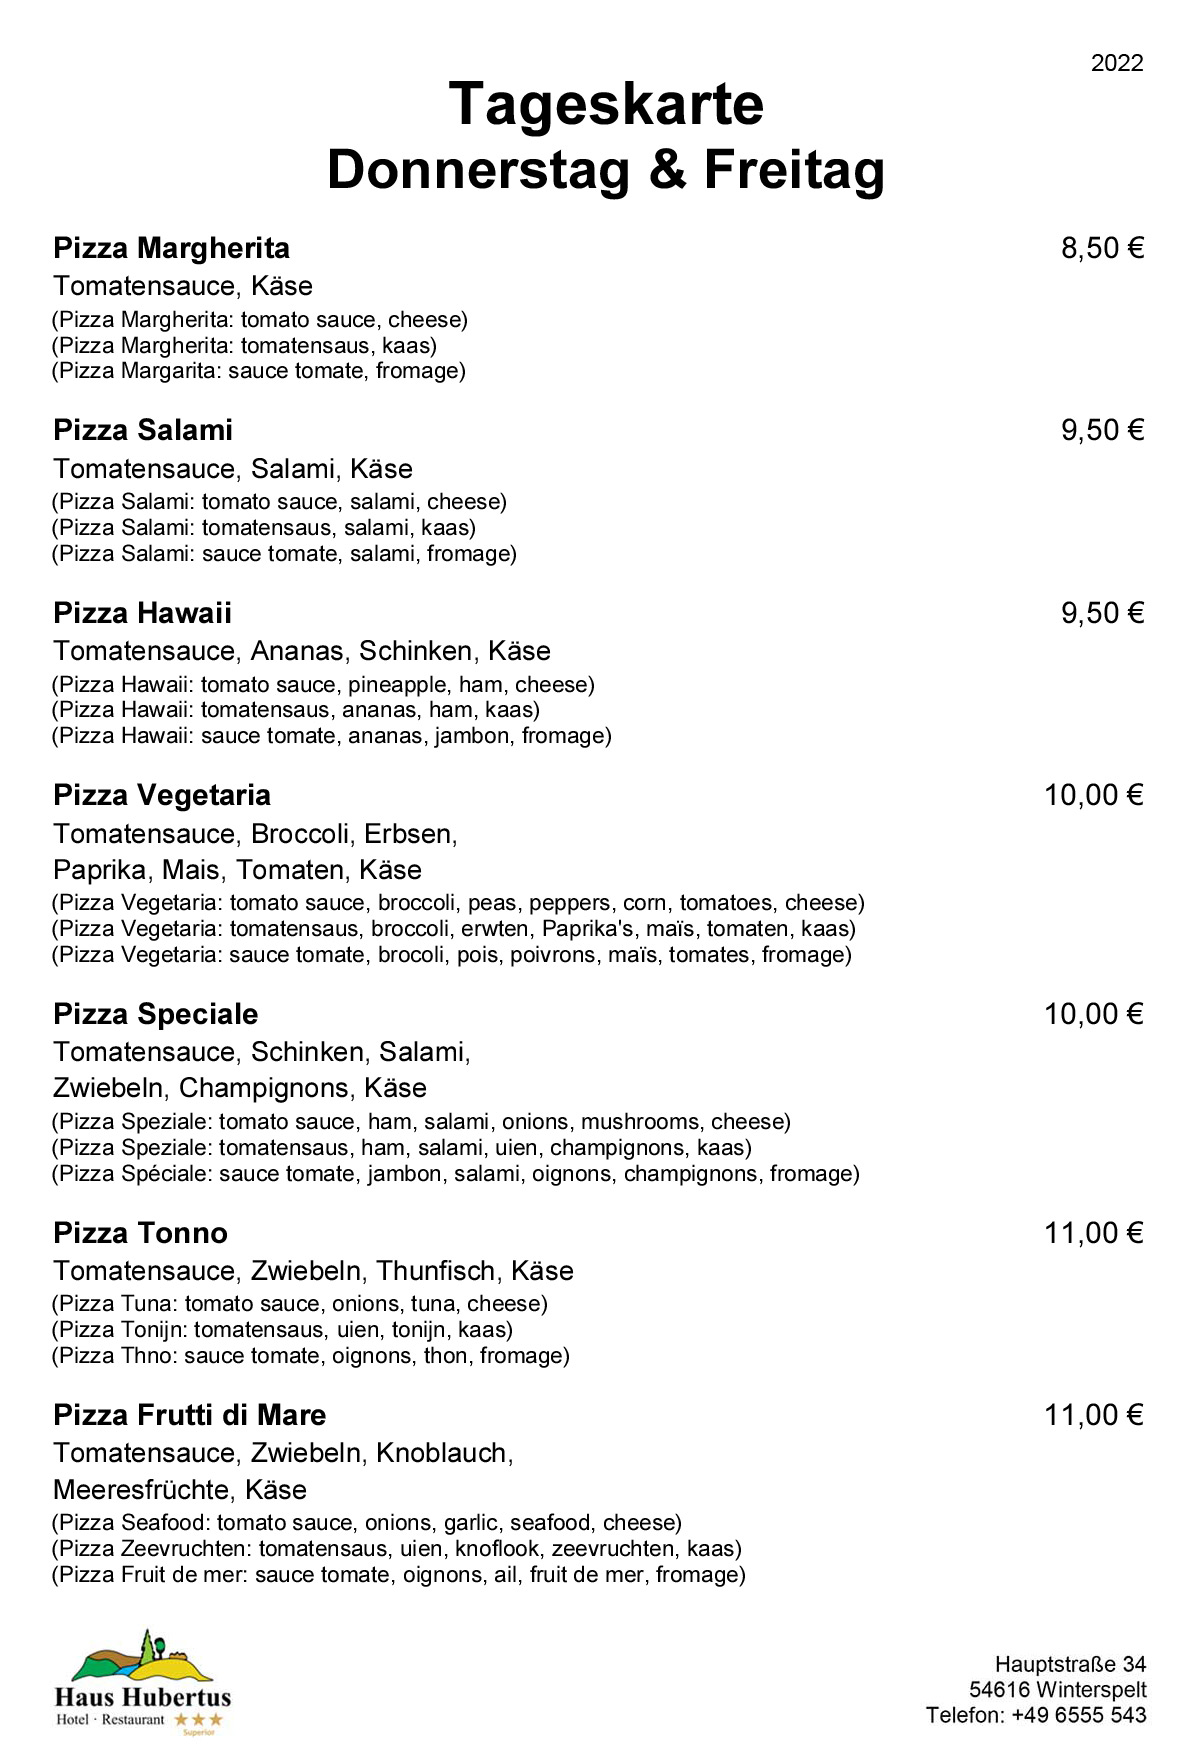 Hotel - Restaurant Haus Hubertus - Menu 07/2022 - Daily menu / Thursday and Friday